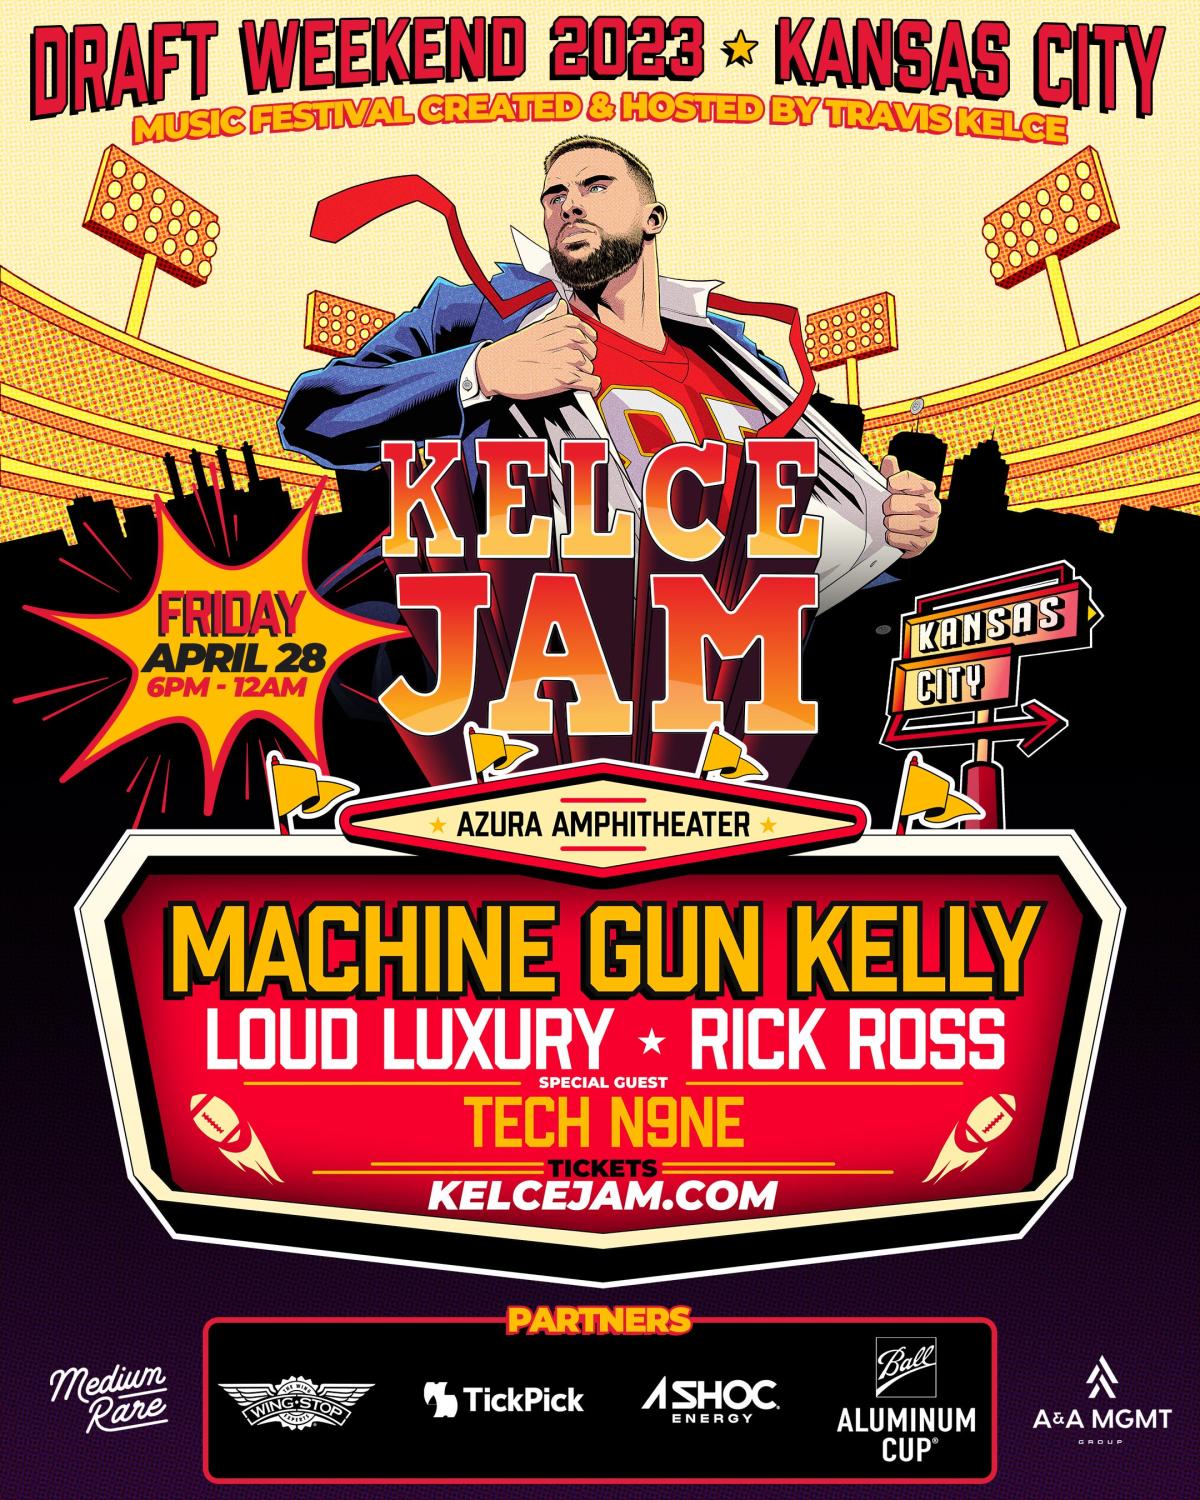 Travis Kelce to host Kansas music festival featuring Machine Gun Kelly